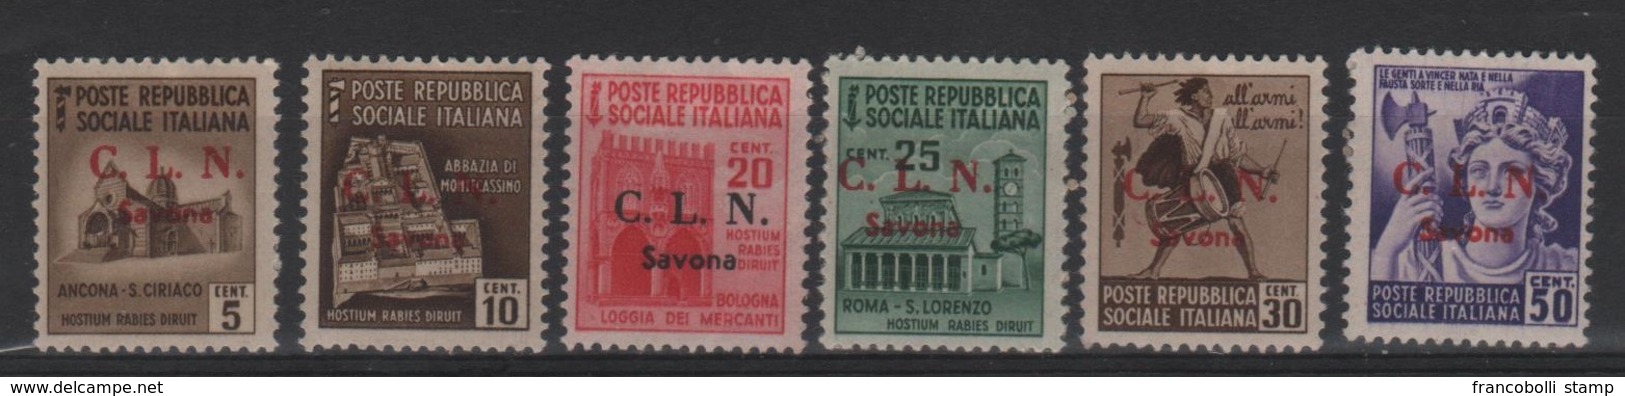 1945 C.L.N. Savona Lotto - National Liberation Committee (CLN)